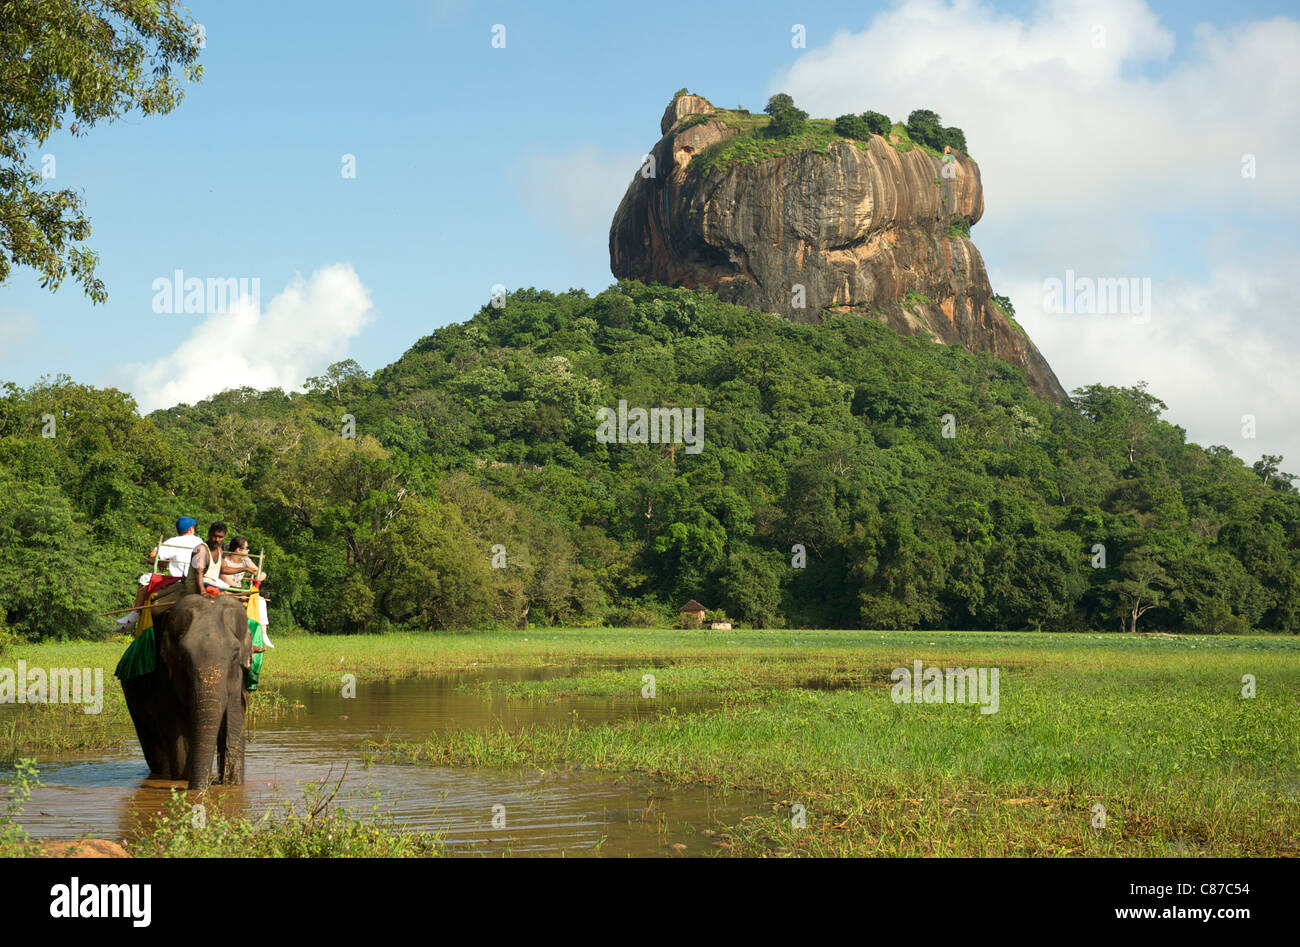 An elephant ride in Sigiriya Sri Lanka Stock Photo